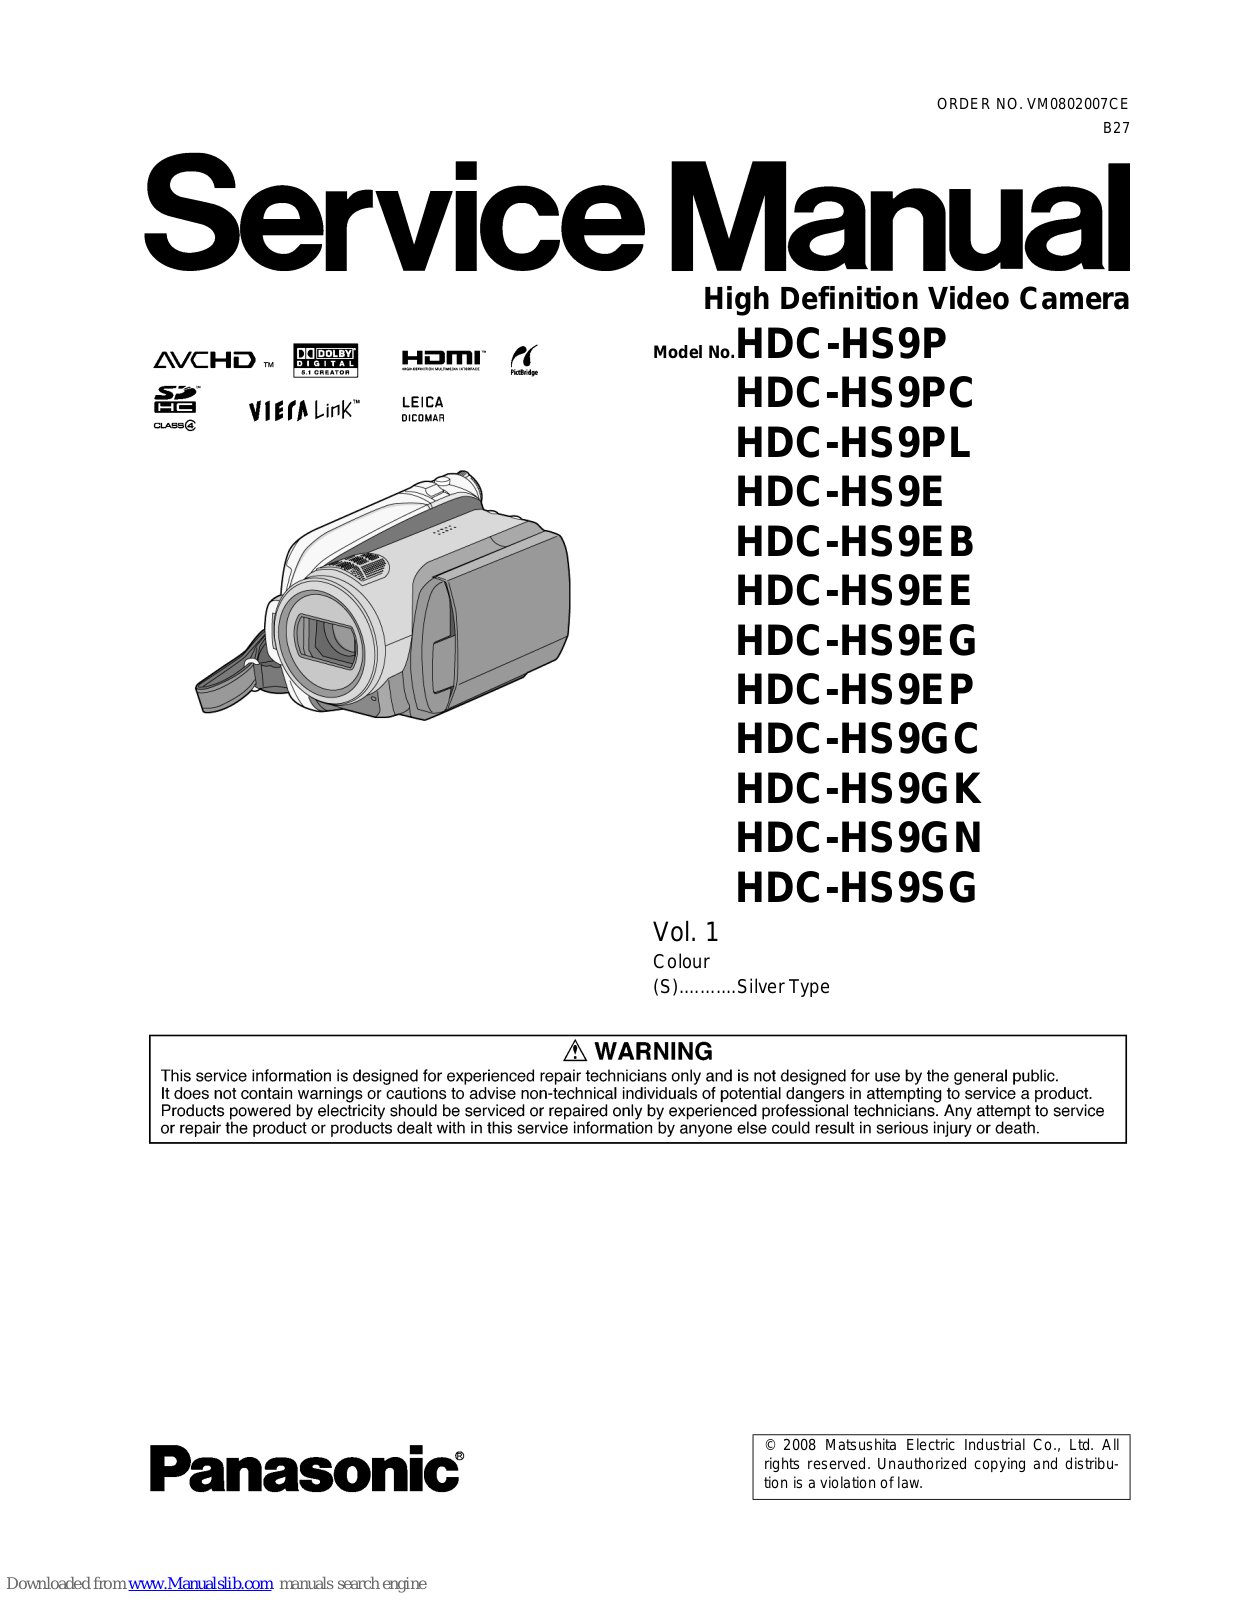 Sony HDC-HS9P, HDC-HS9PC, HDC-HS9E, HDC-HS9PL, HDC-HS9EB Service Manual